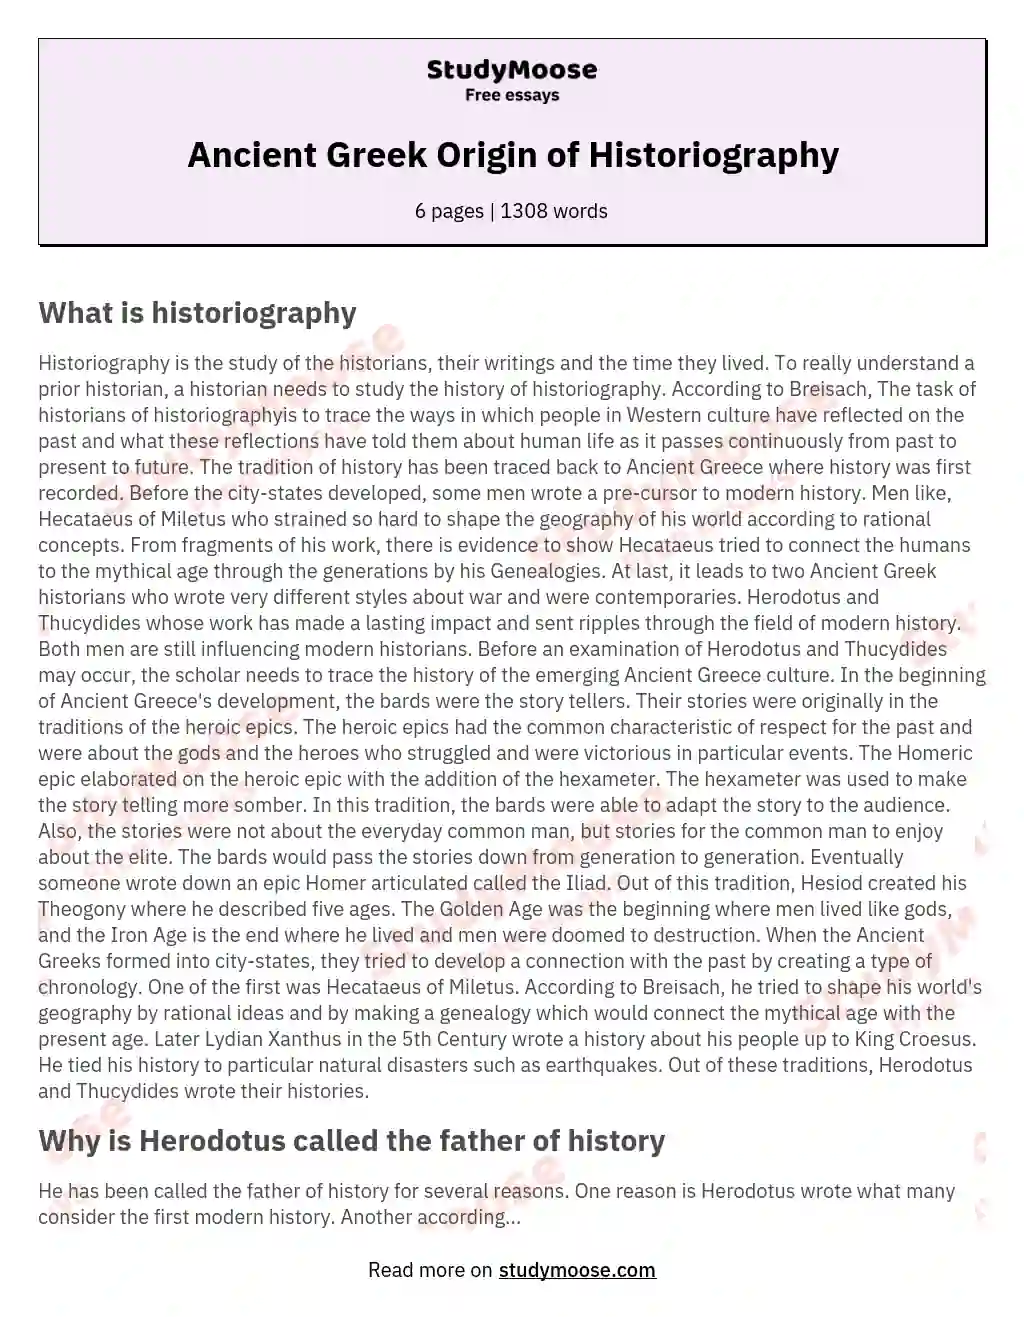 Ancient Greek Origin of Historiography essay